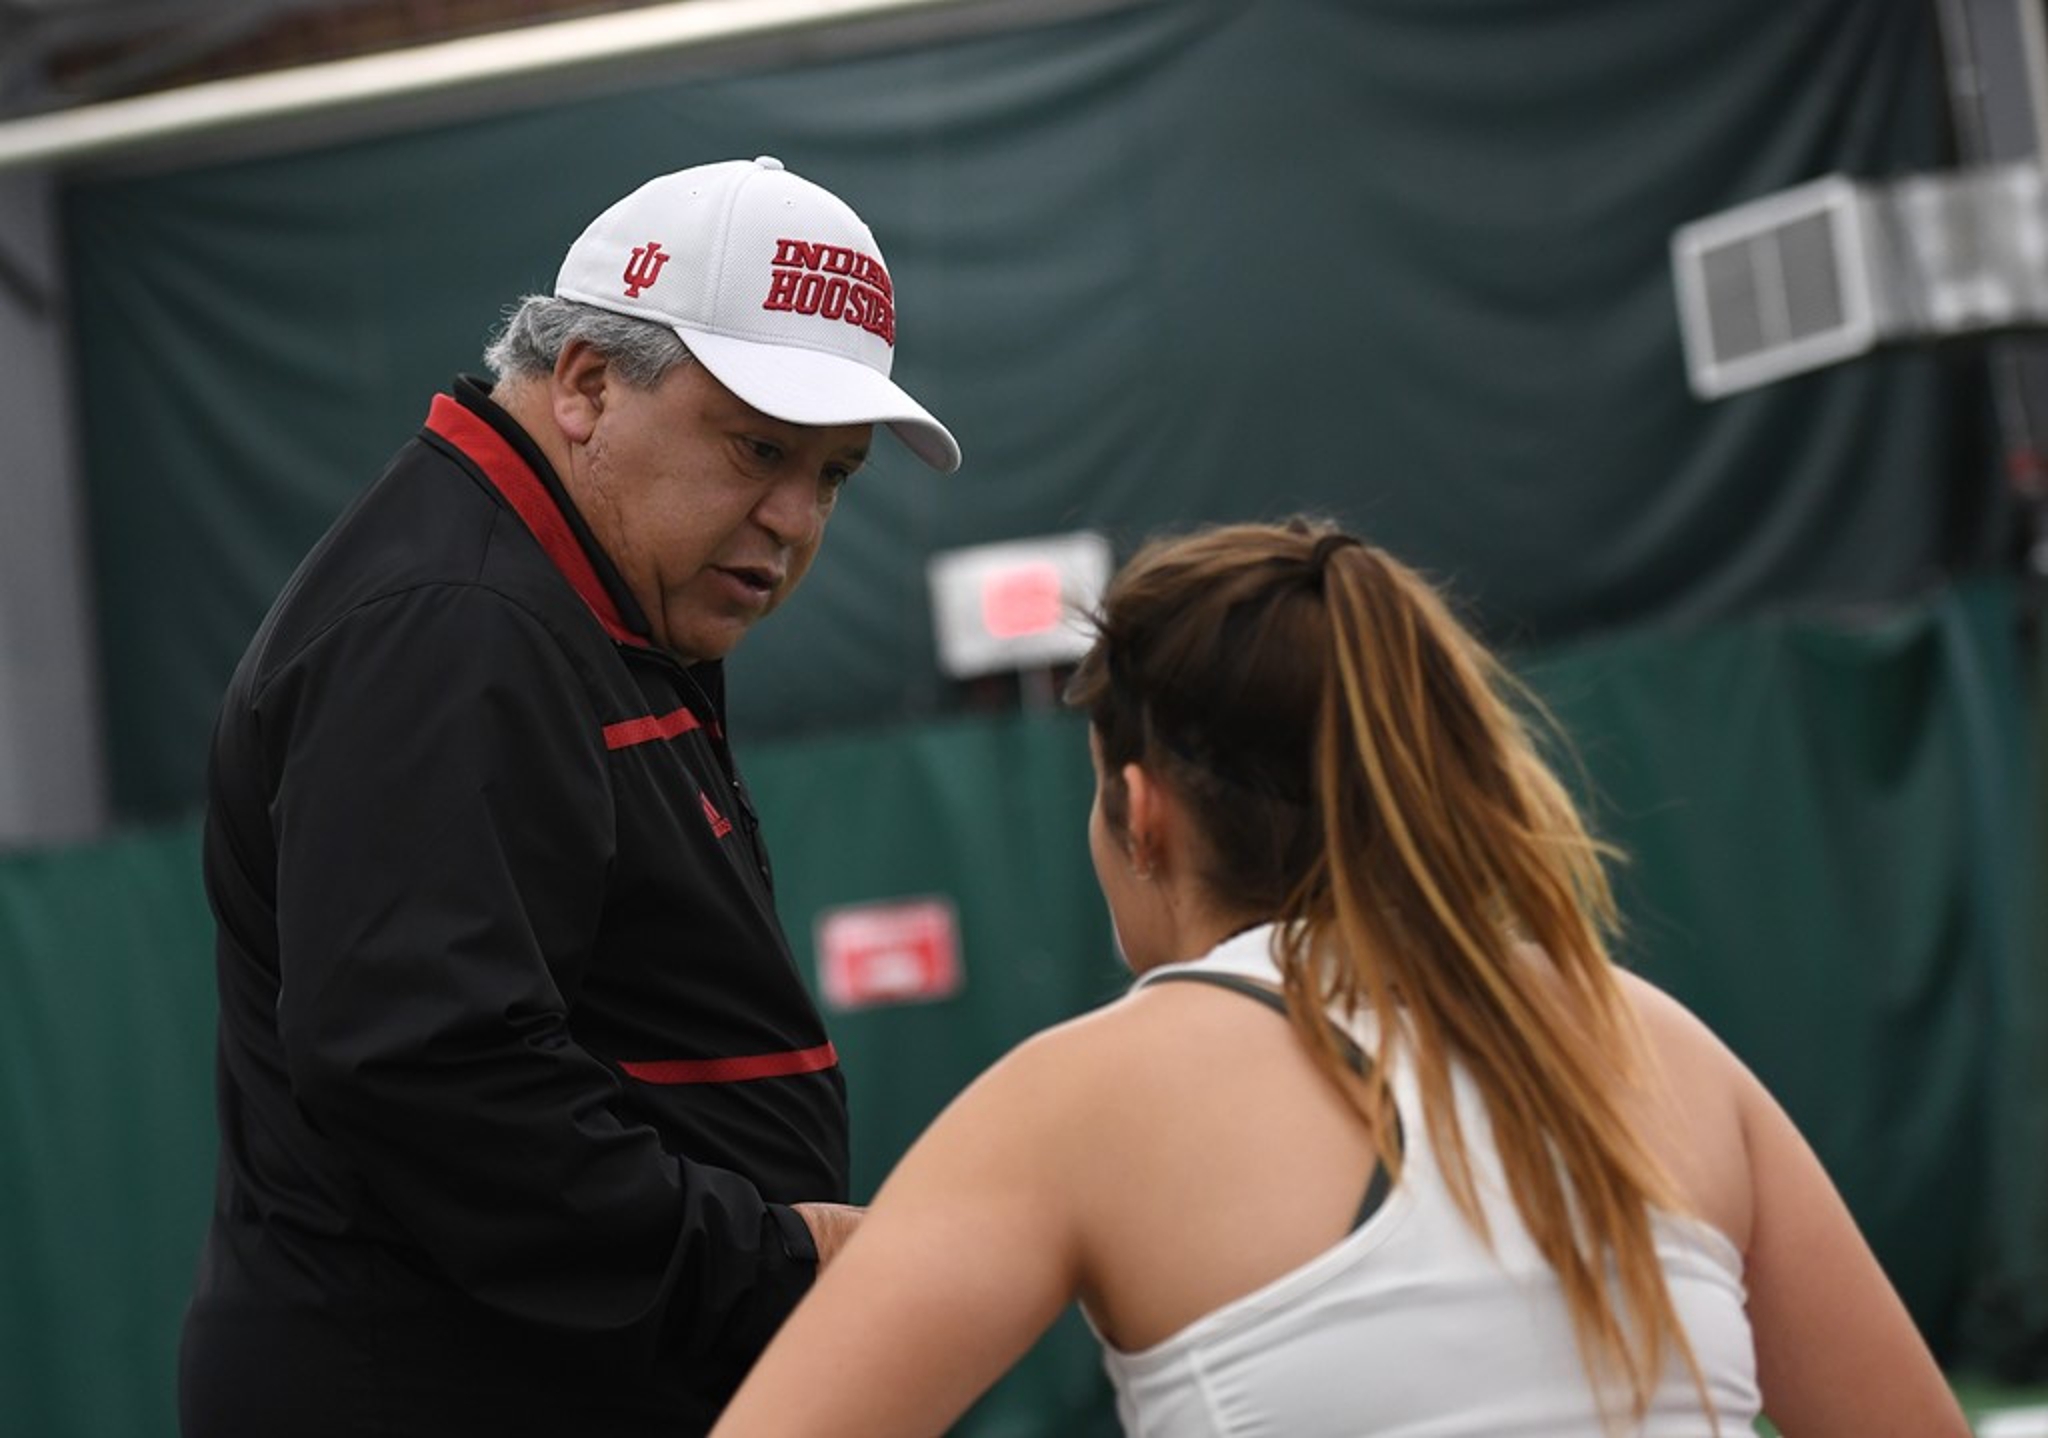 Ramiro Azcui speaks to a women's tennis player